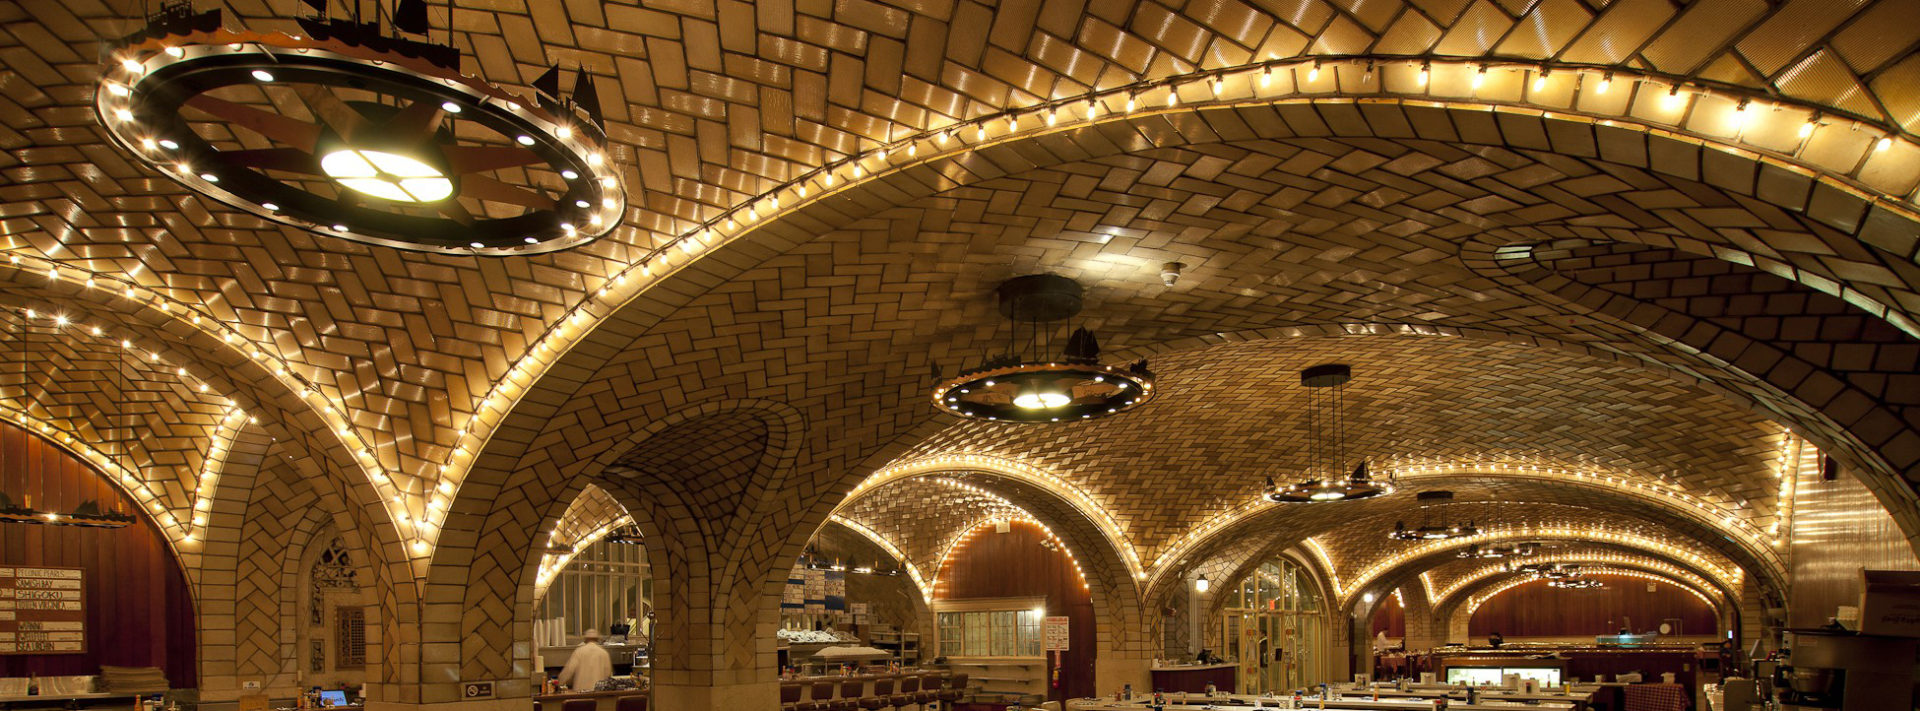 Professor John Ochsendorf comments on Grand Central Oyster Bar architecture for Eater New York